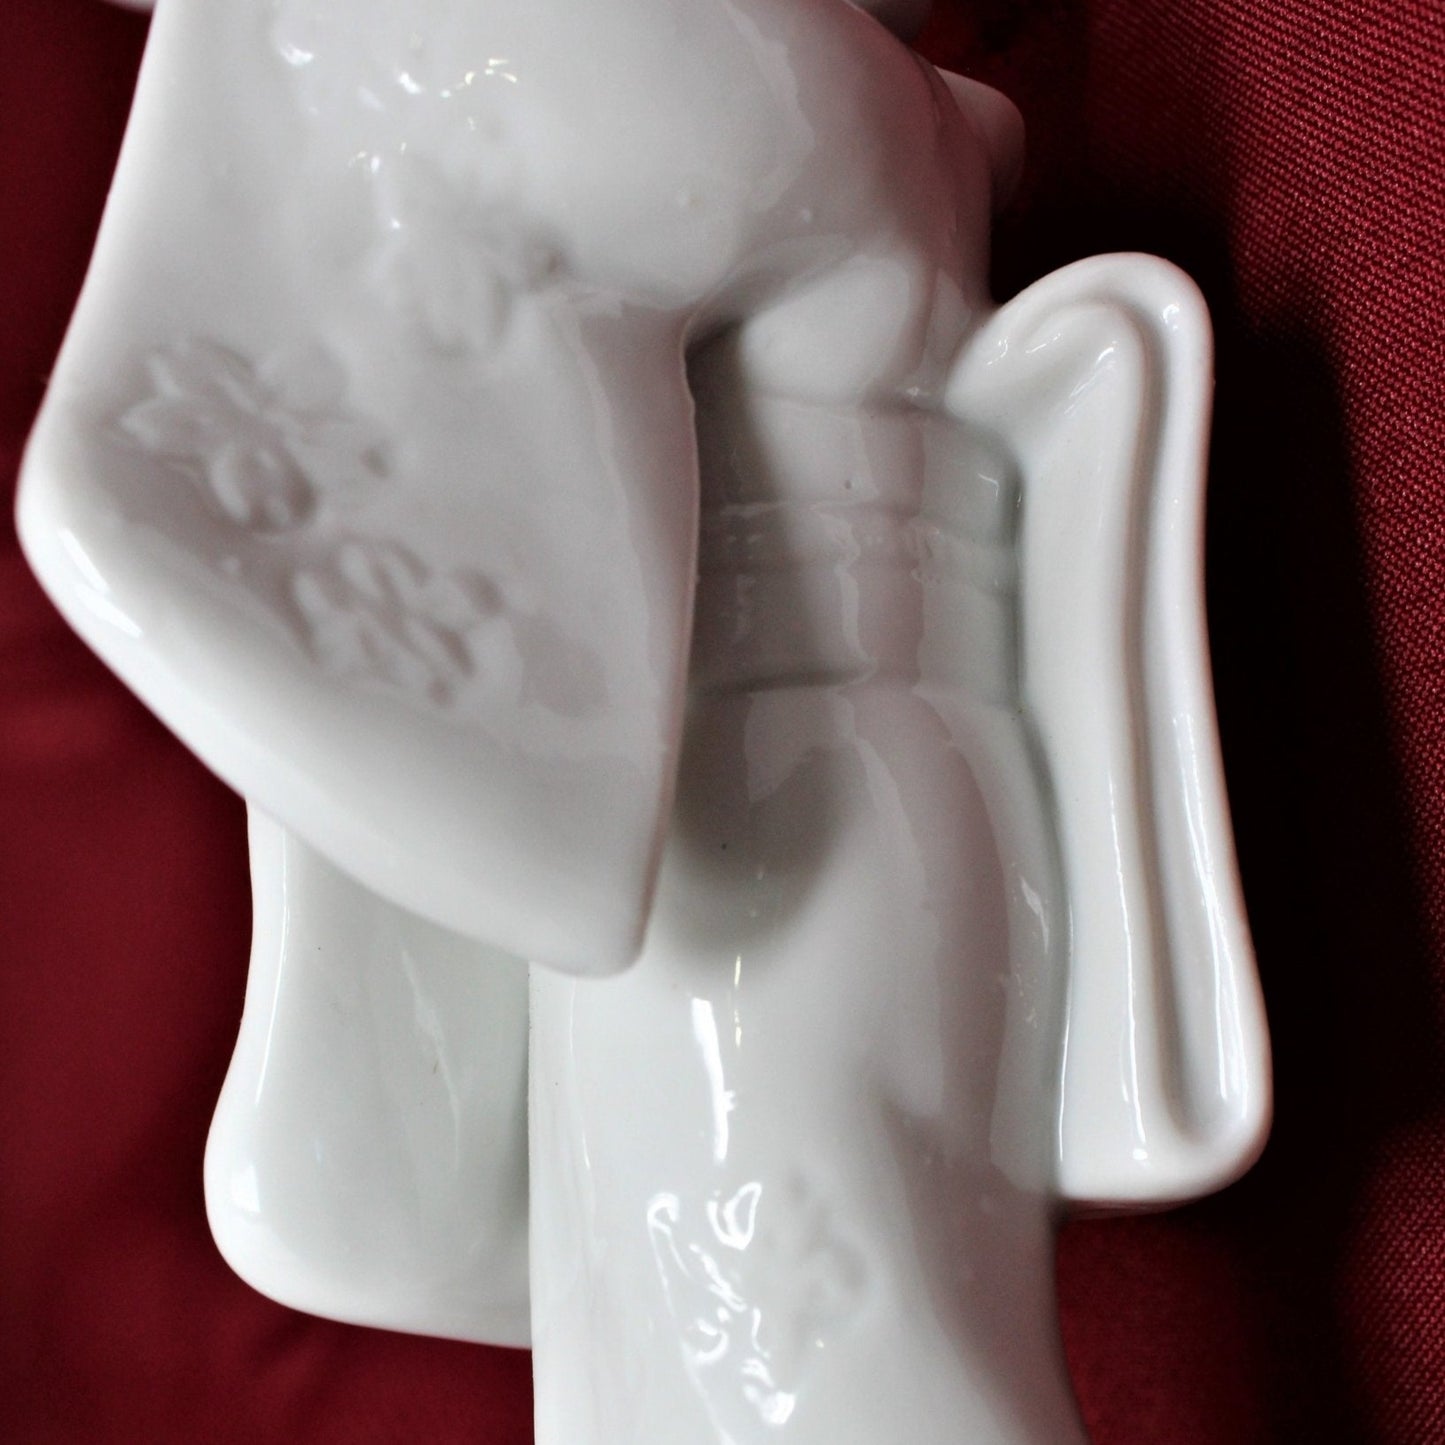 Figurine, HomCo, Geishas #1443, Set of 2, Porcelain Vintage